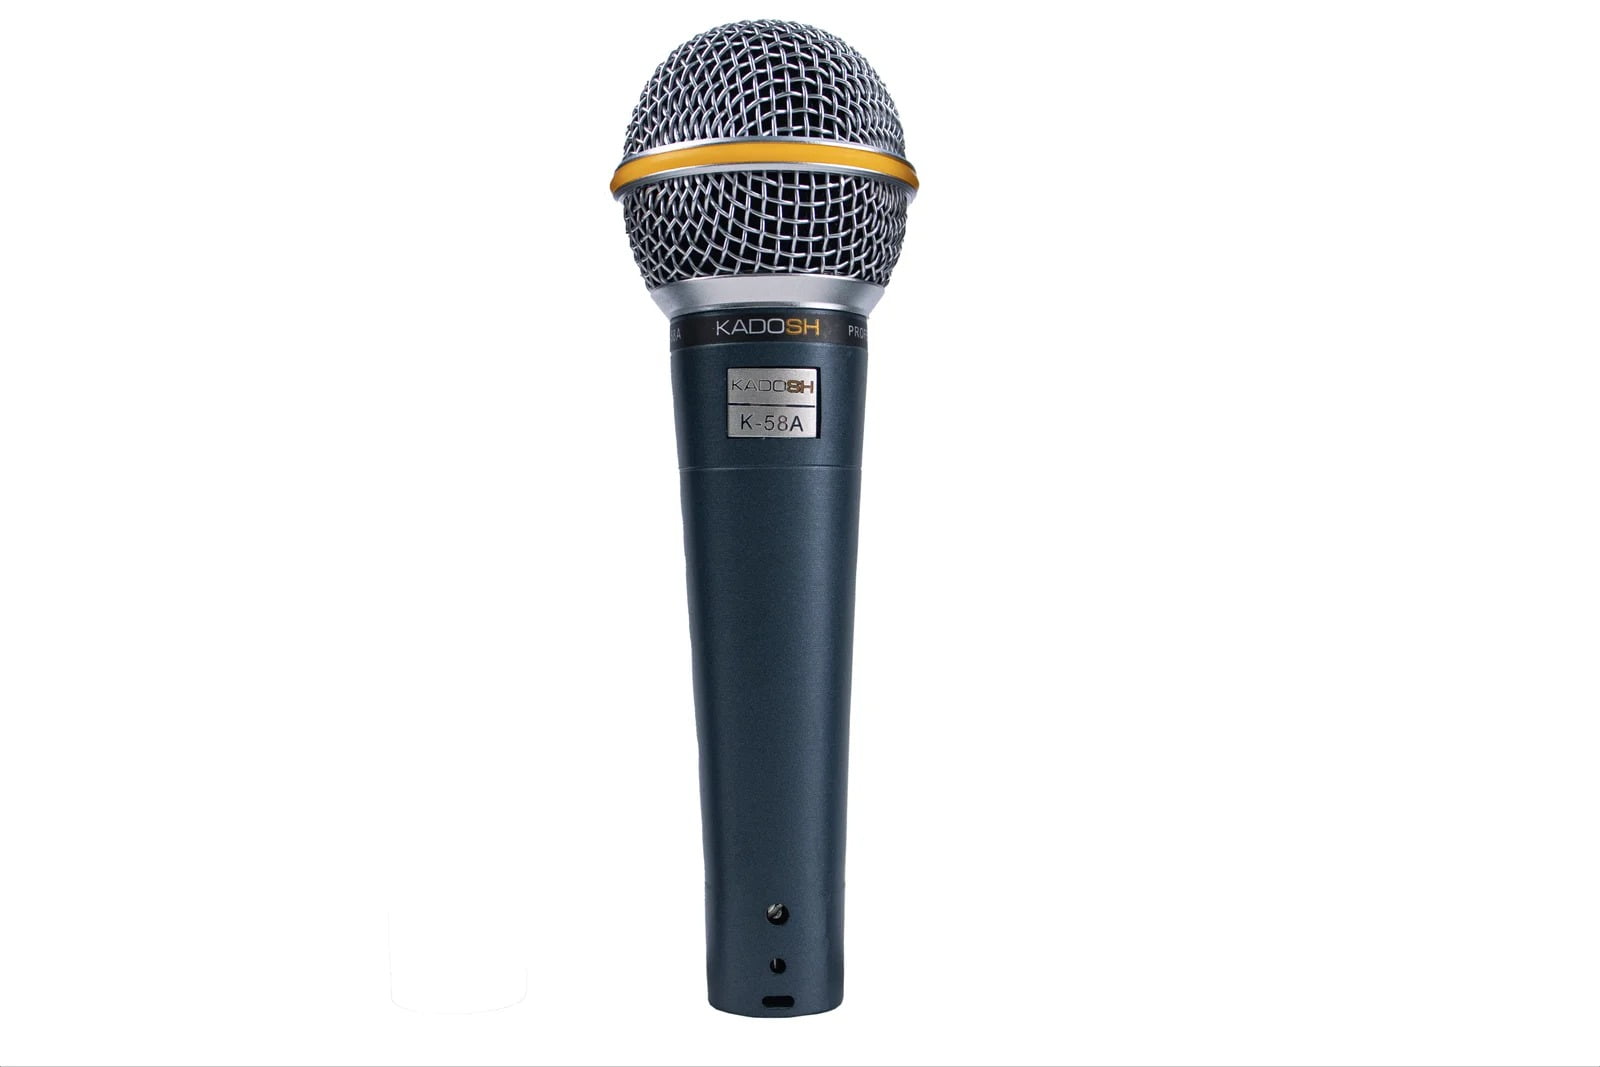 Microfone Kadosh c/cachimbo K58A